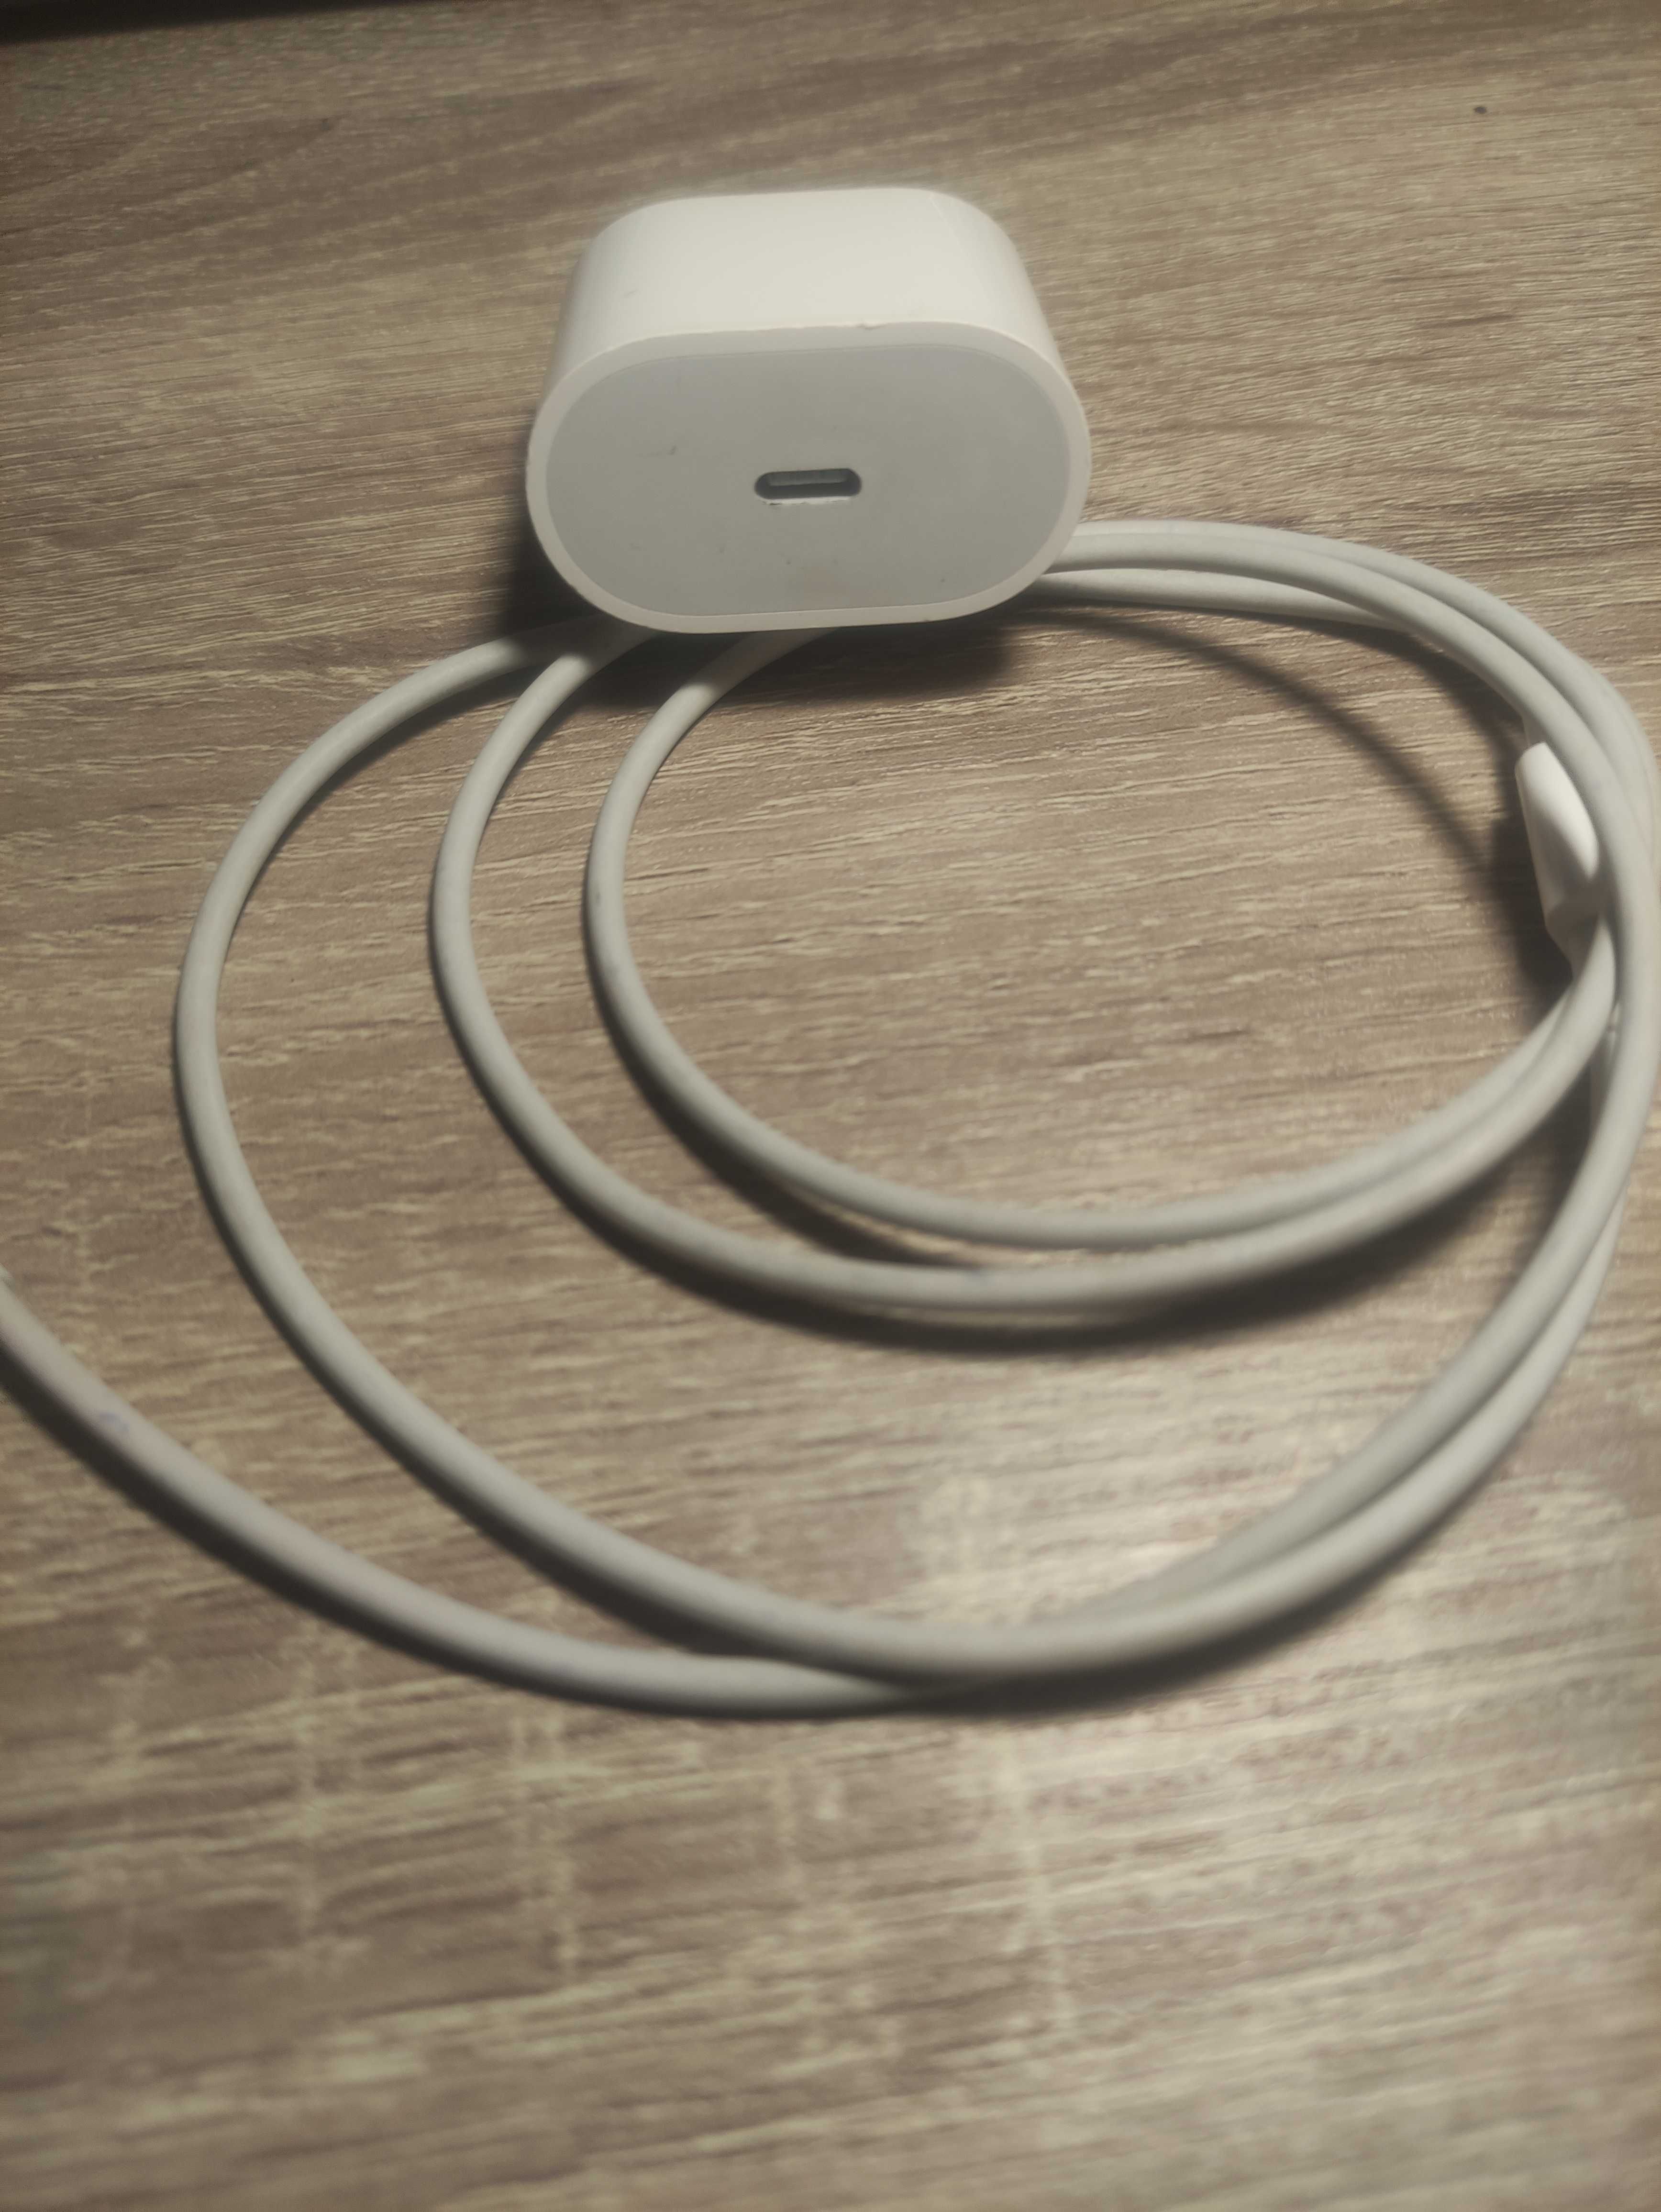 блок живлення та кабель  для iPhone 11 неробочий